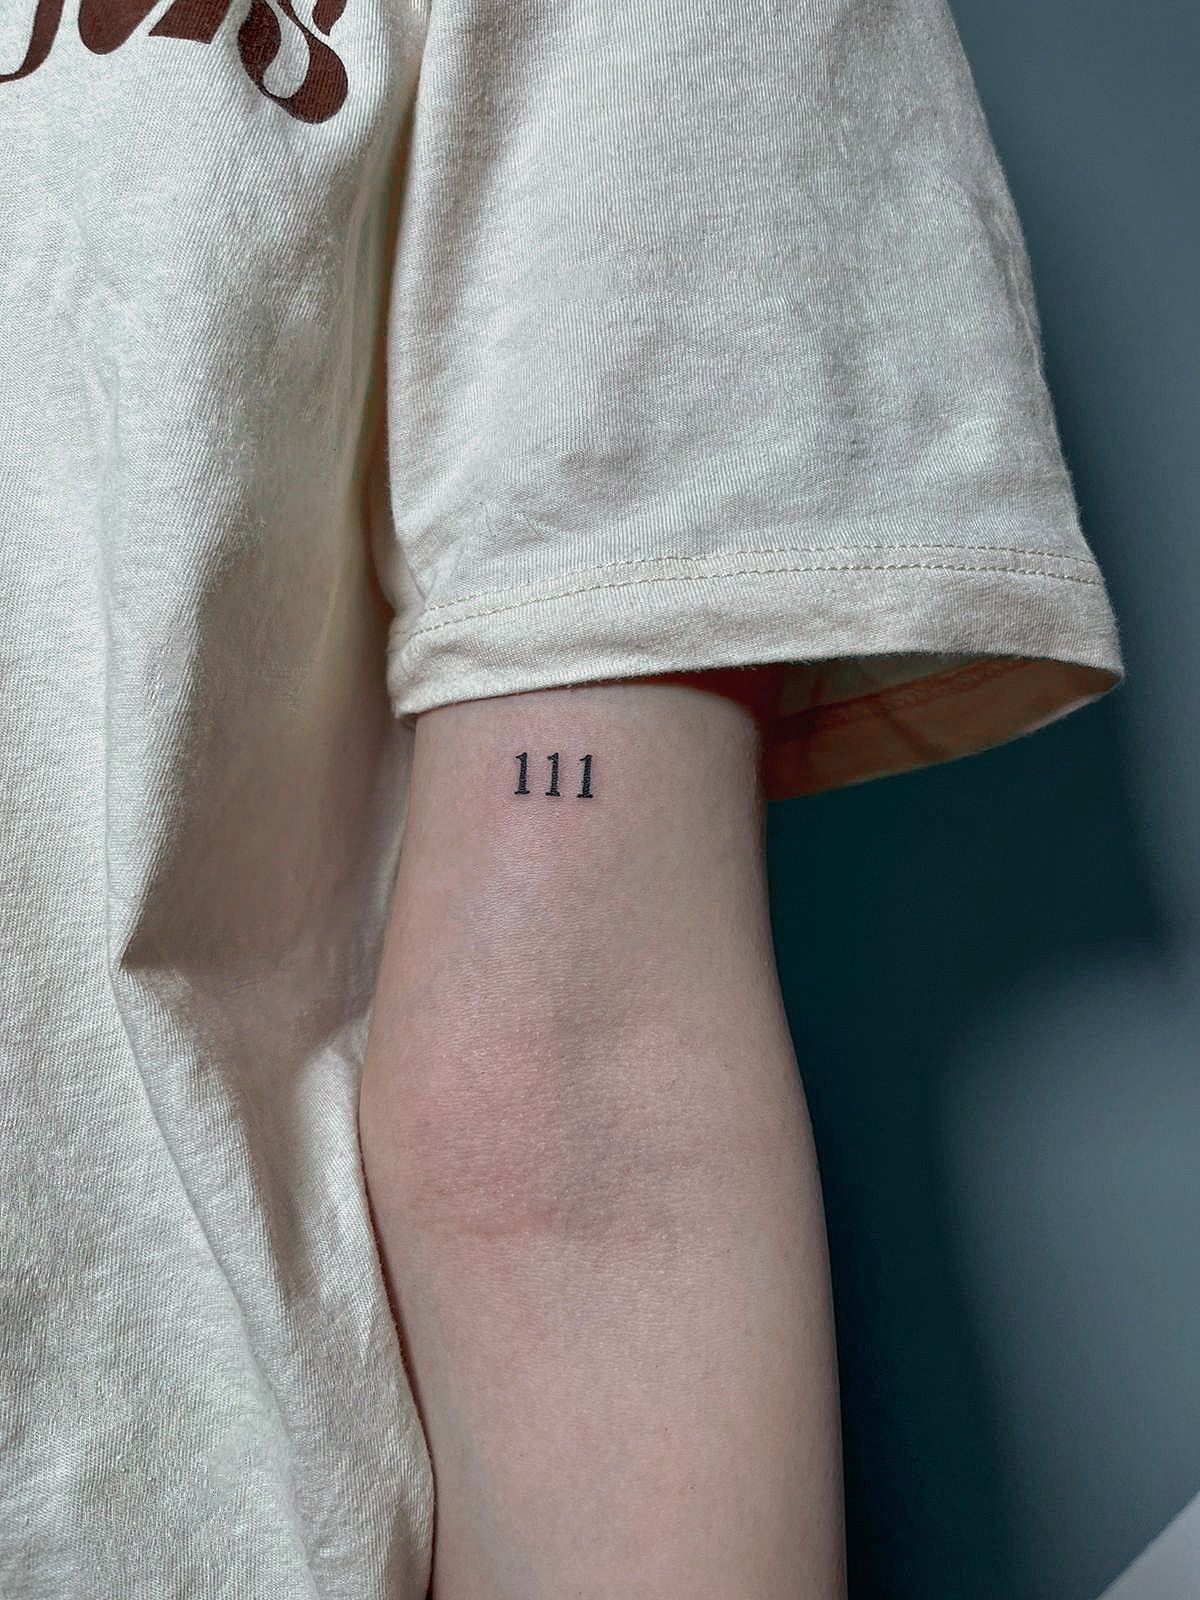 Arm 111 angel number tattoo